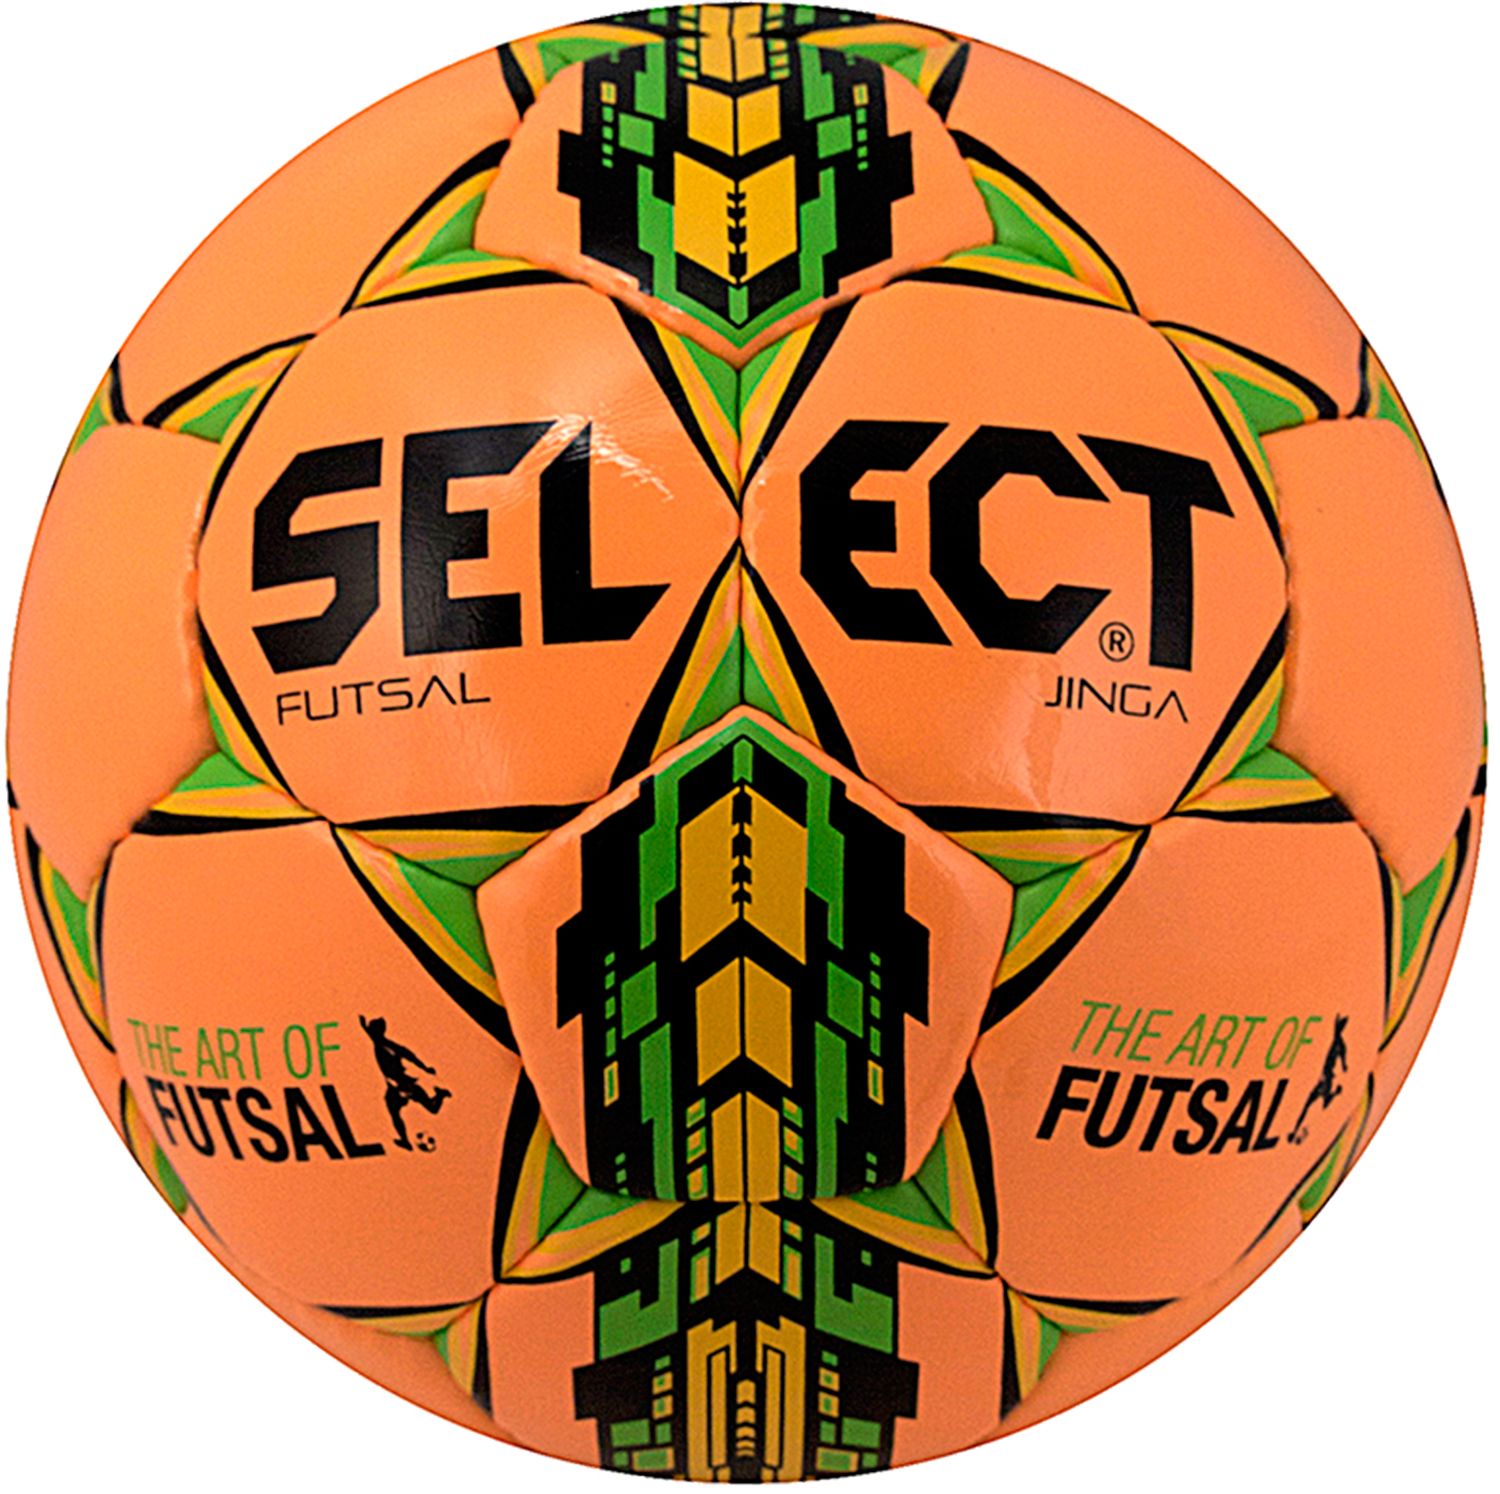 Soccer Balls | Best Price Guarantee at DICK'S